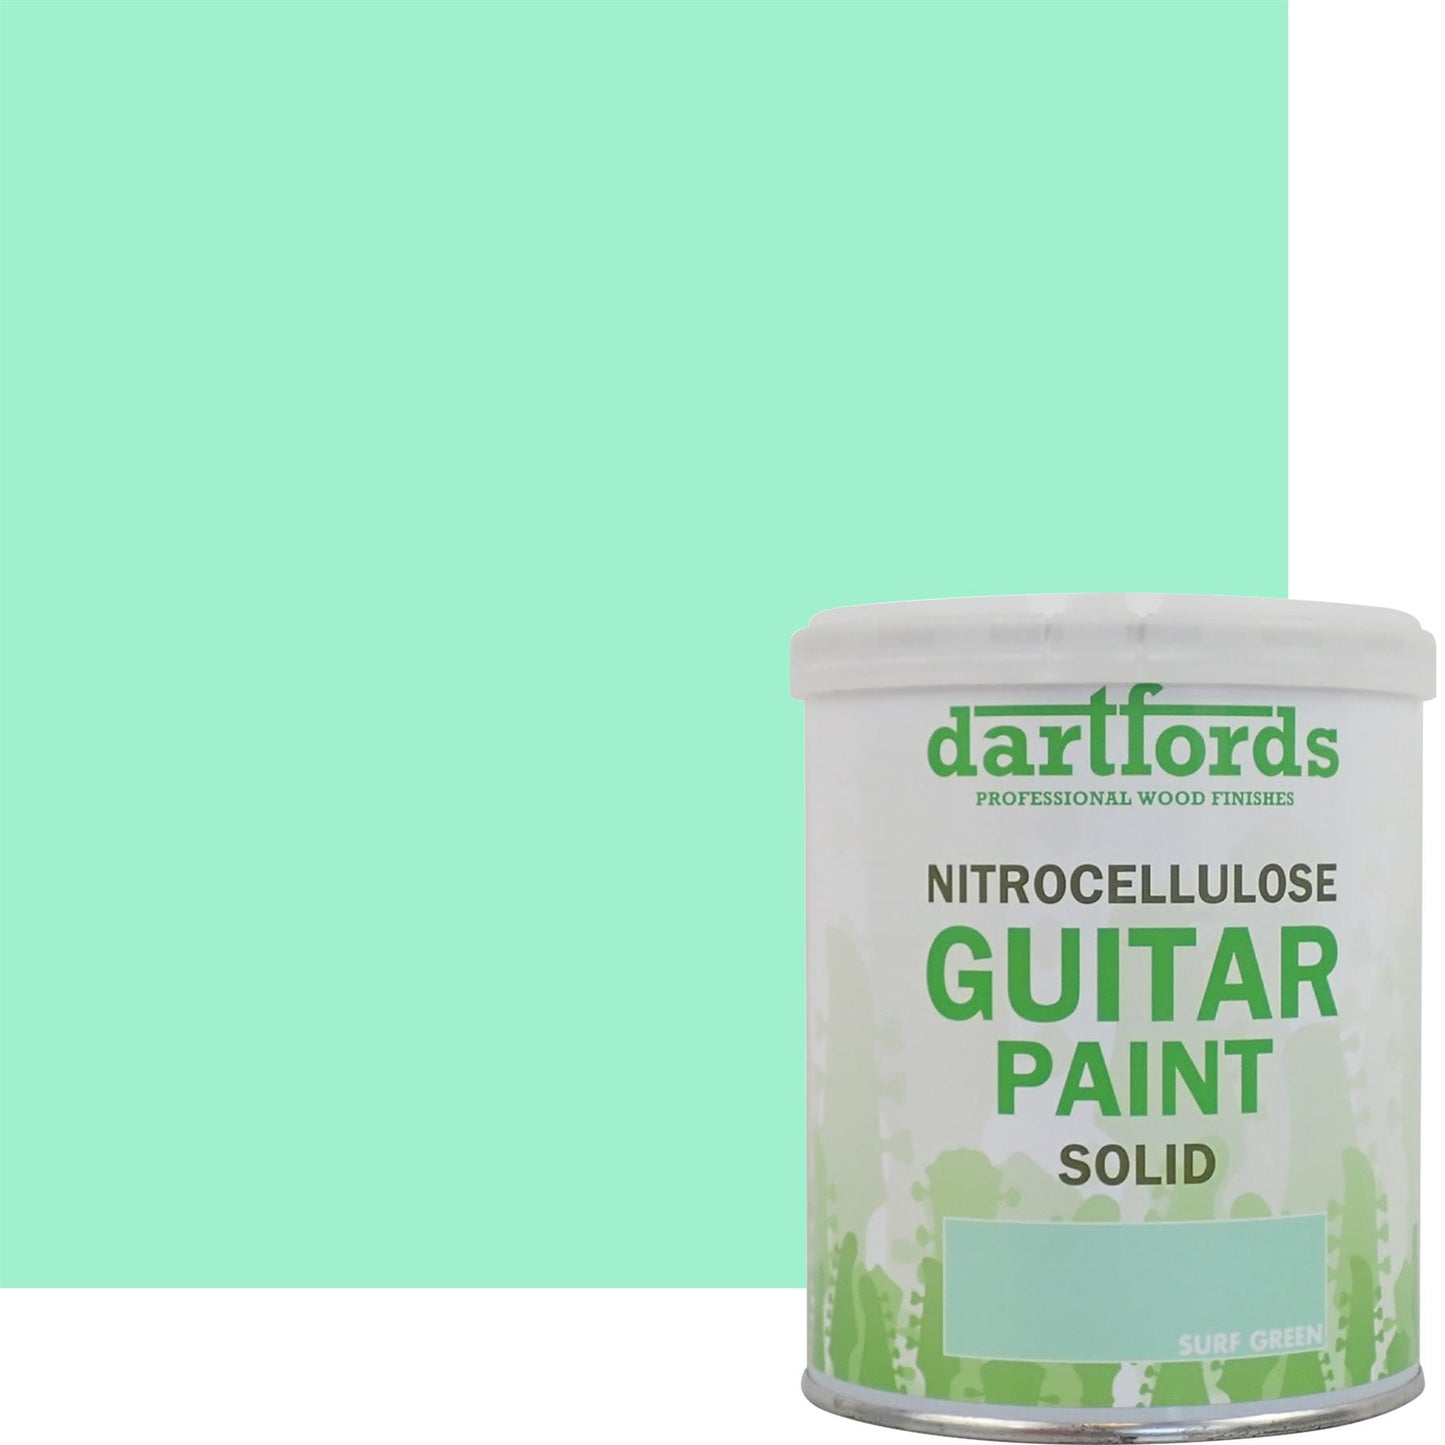 dartfords Surf Green Nitrocellulose Guitar Paint - 1 litre Tin